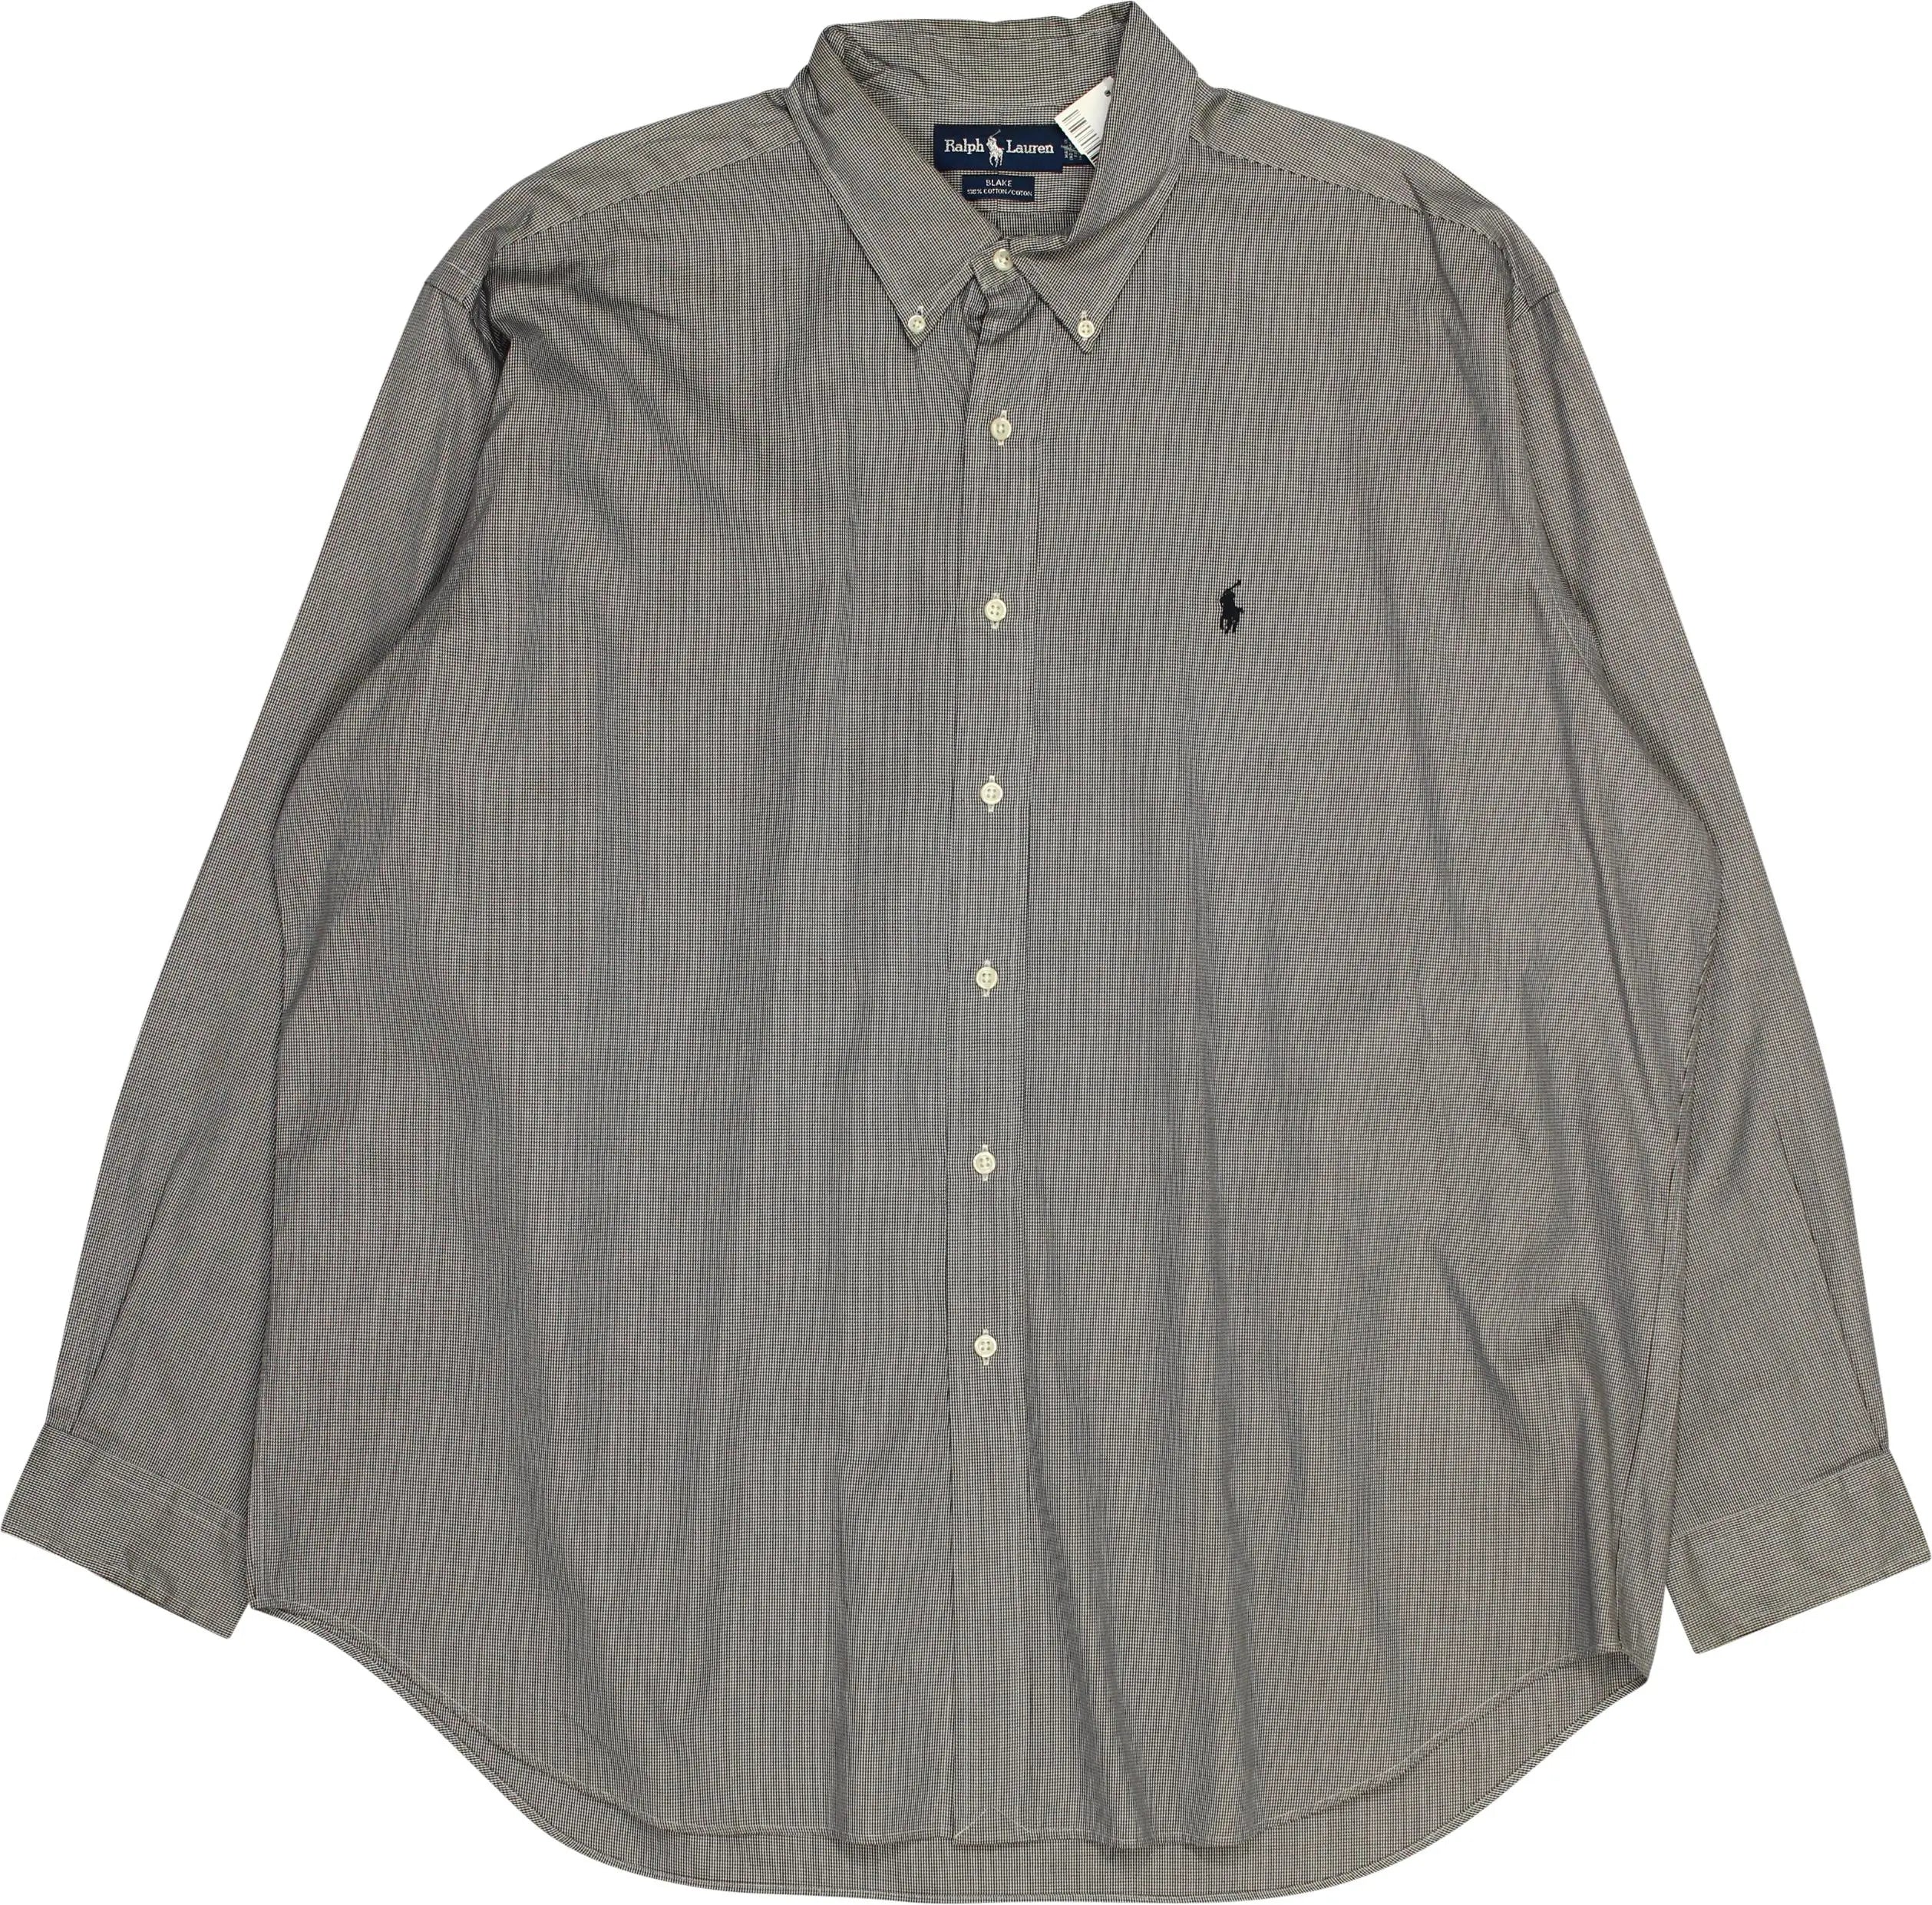 Ralph Lauren - Checkered shirt by Ralph Lauren- ThriftTale.com - Vintage and second handclothing